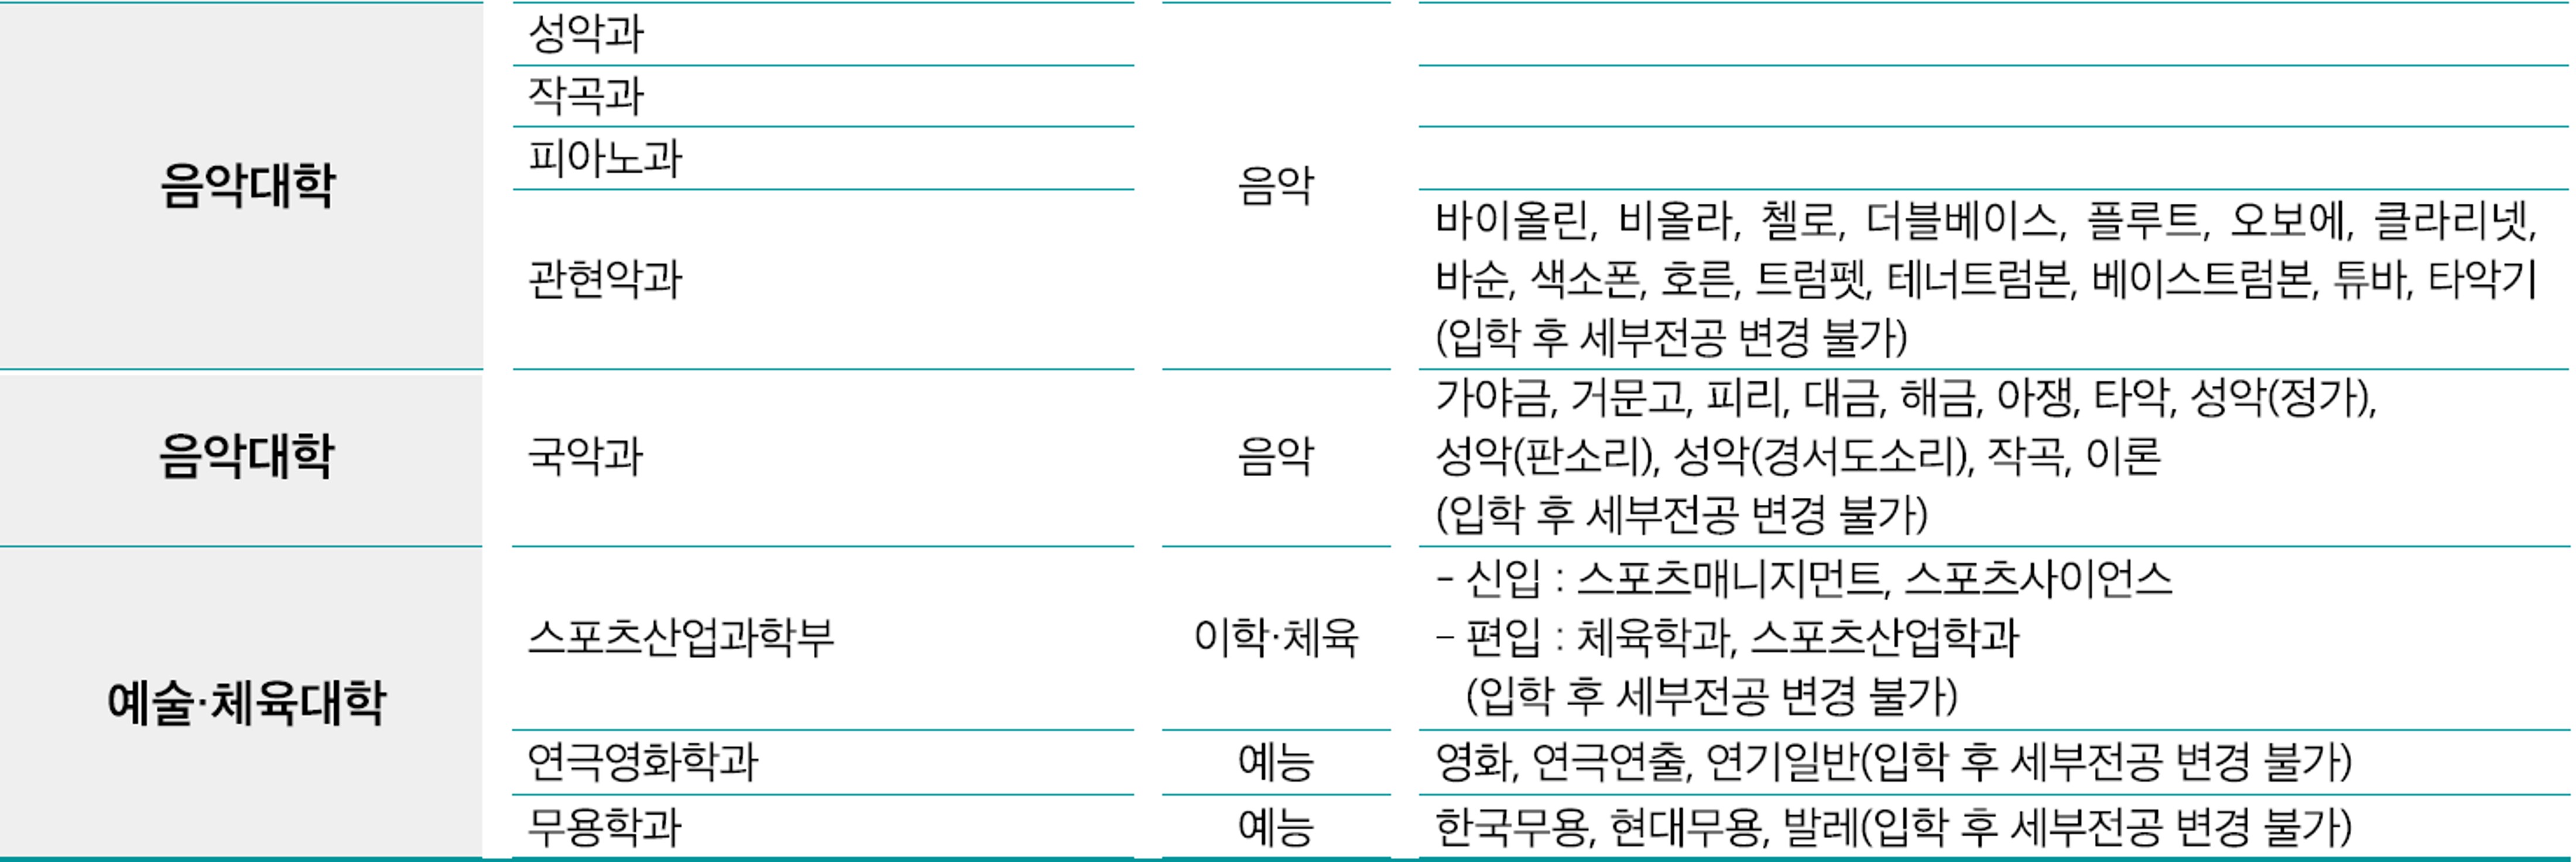 Hanyang University Foreign Student Admission Unit Eligibility Schedule_English Version 한양대 외국인전형 모집단위 지원자격 전형일정_한글본_03_모집단위.jpg